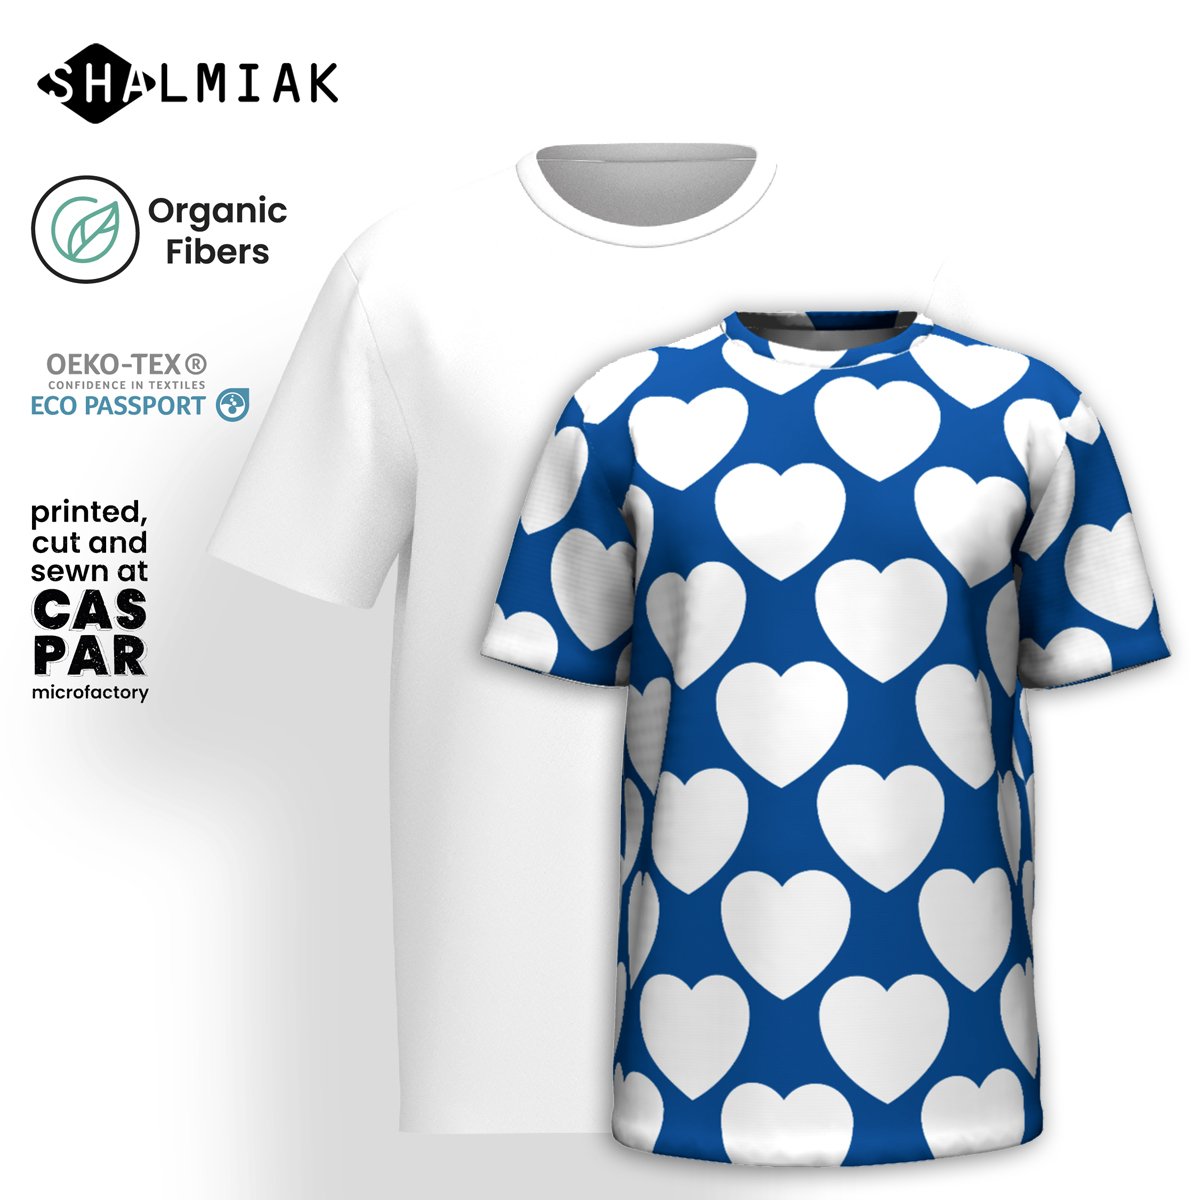 ELLIE LOVE fin - T-shirt (organic cotton)